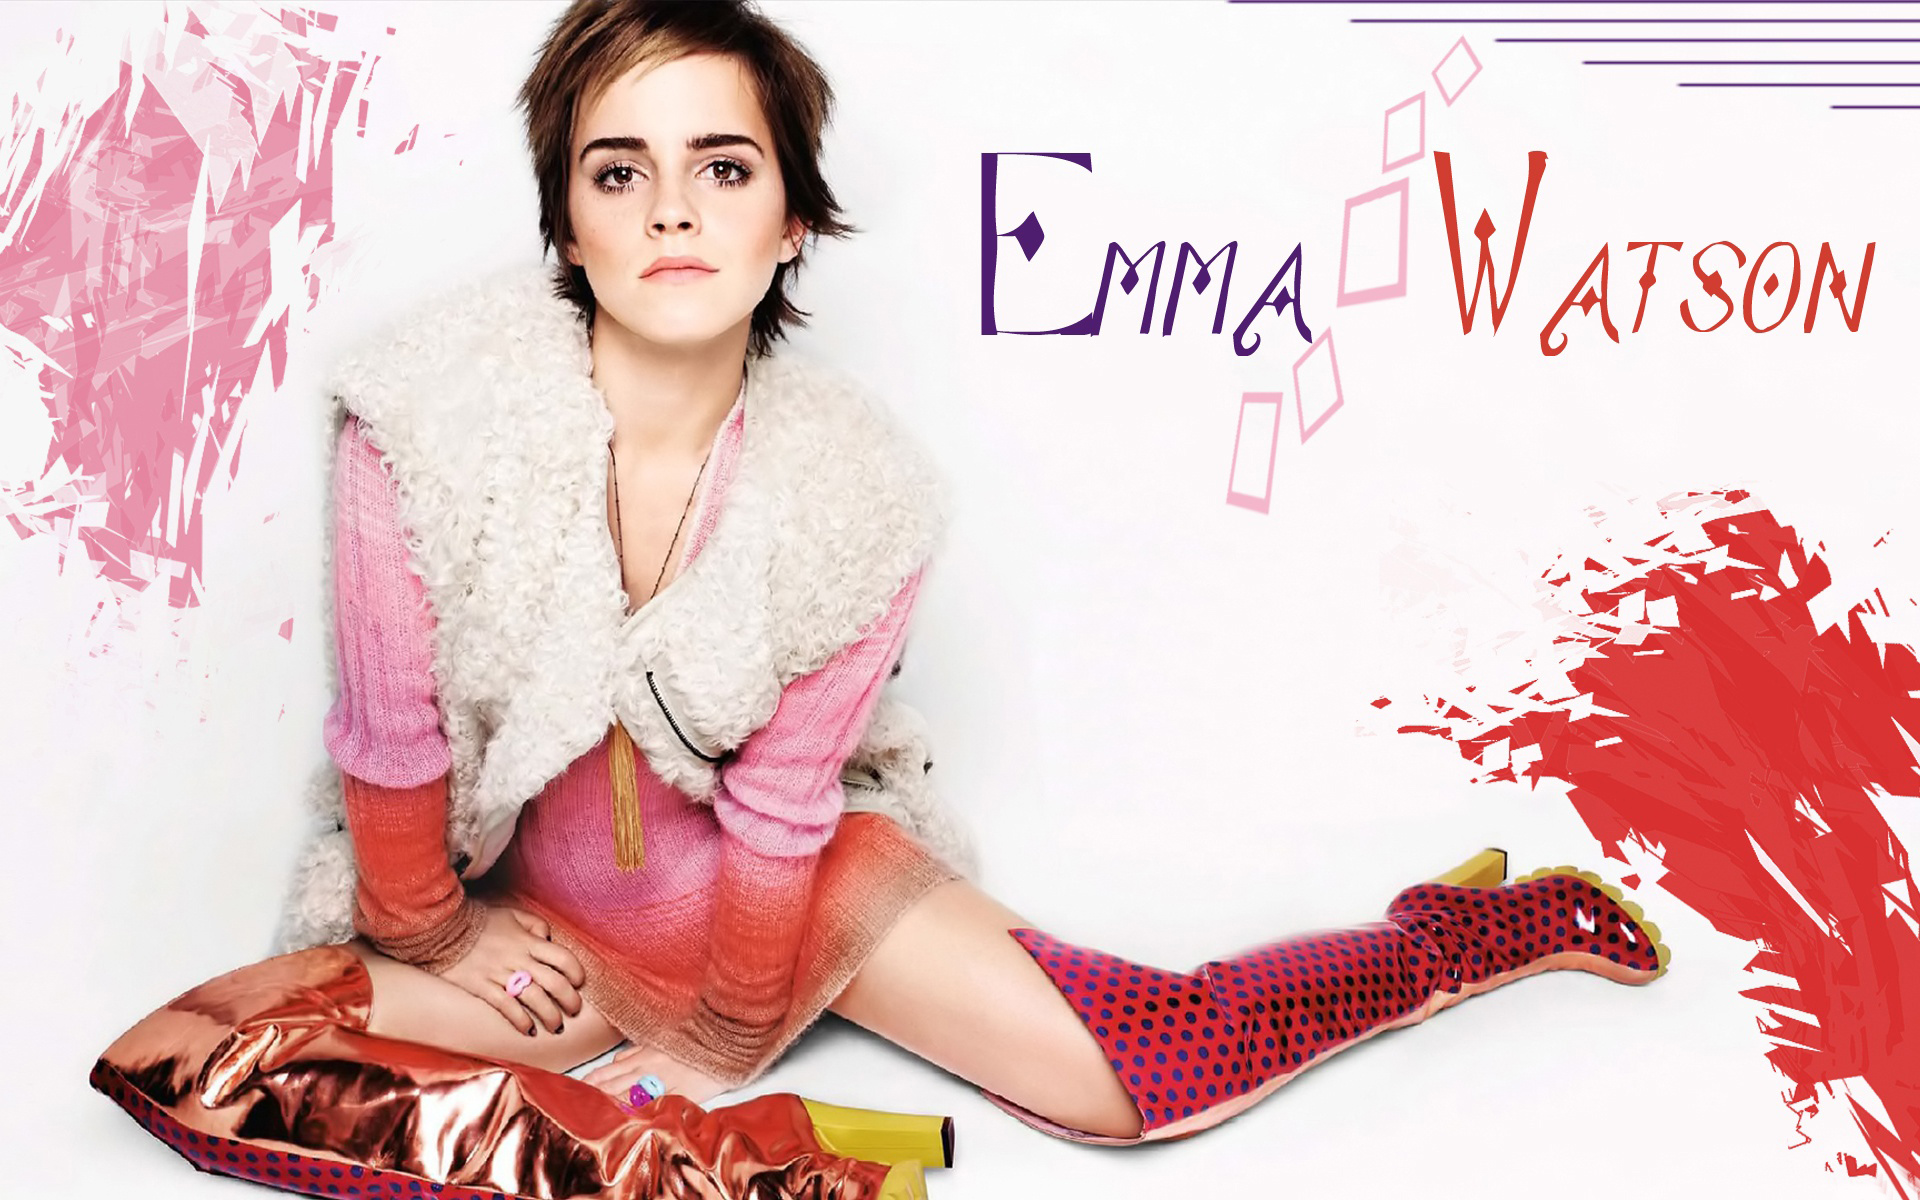 Wallpaper Of The Most Popular Actress Emma Watson